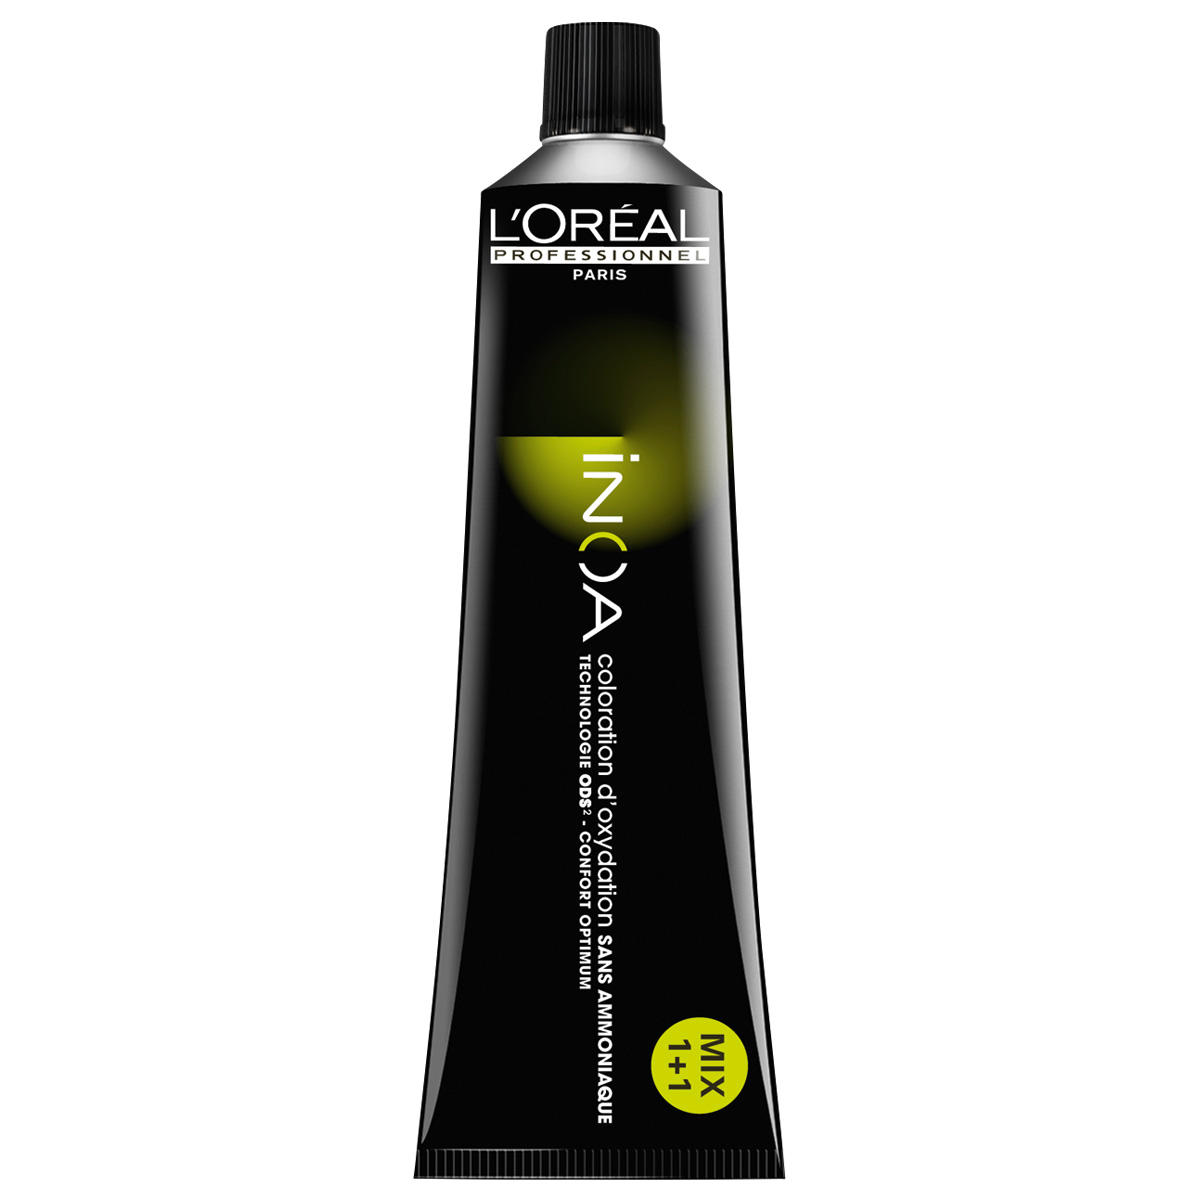 L'Oréal Professionnel Paris Coloration 7 Rubio medio, tubo 60 ml